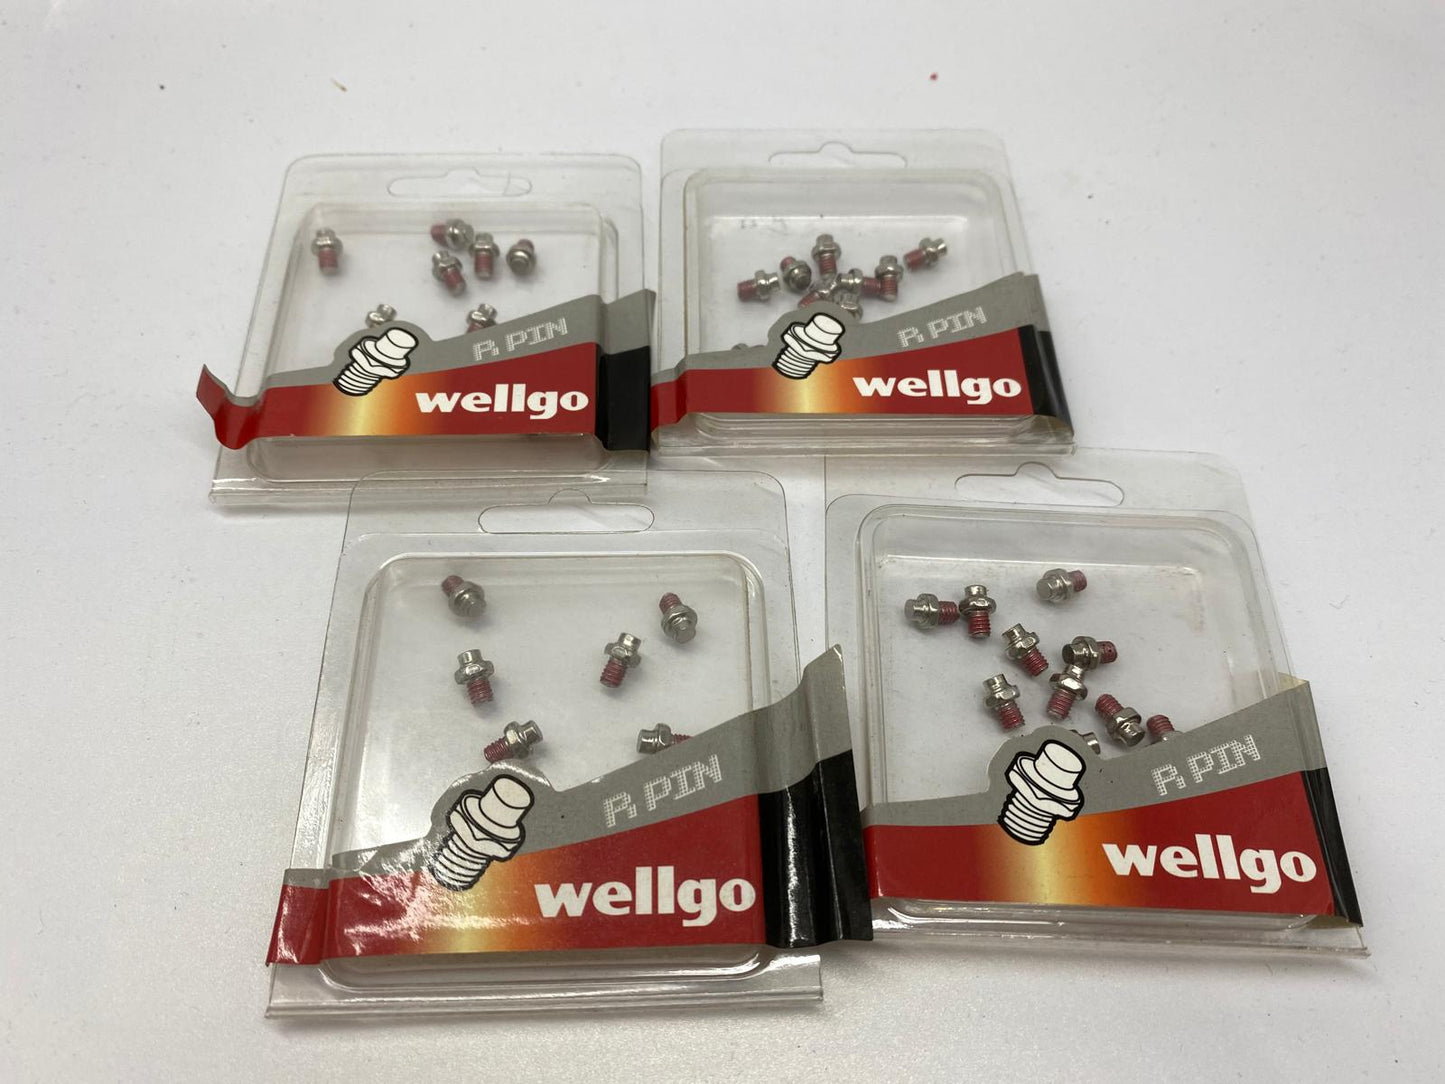 Wellgo R-PIN 腳踏釘 10粒/包 / Wellgo R-PIN pedal Pins set 10pcs